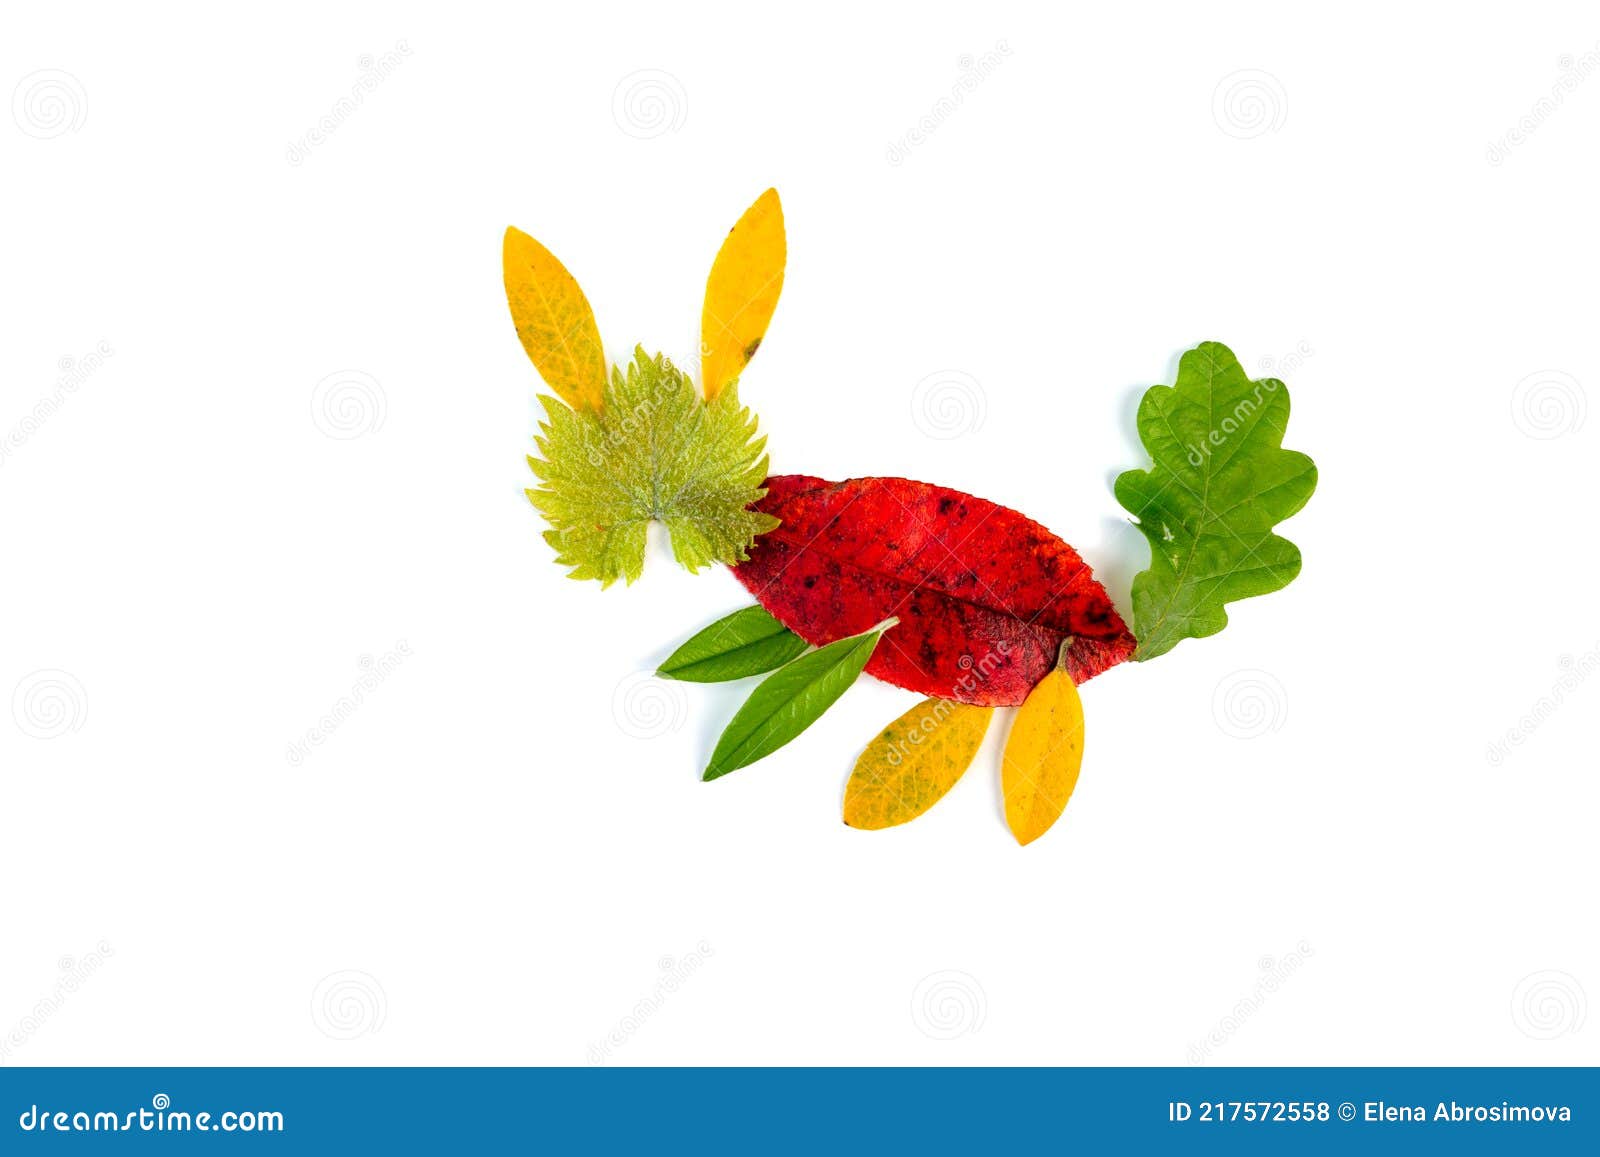 DIY Dry Leaf Clip-art for Kids, Tutorial Stock Photo - Image of seasonal,  fall: 217572558